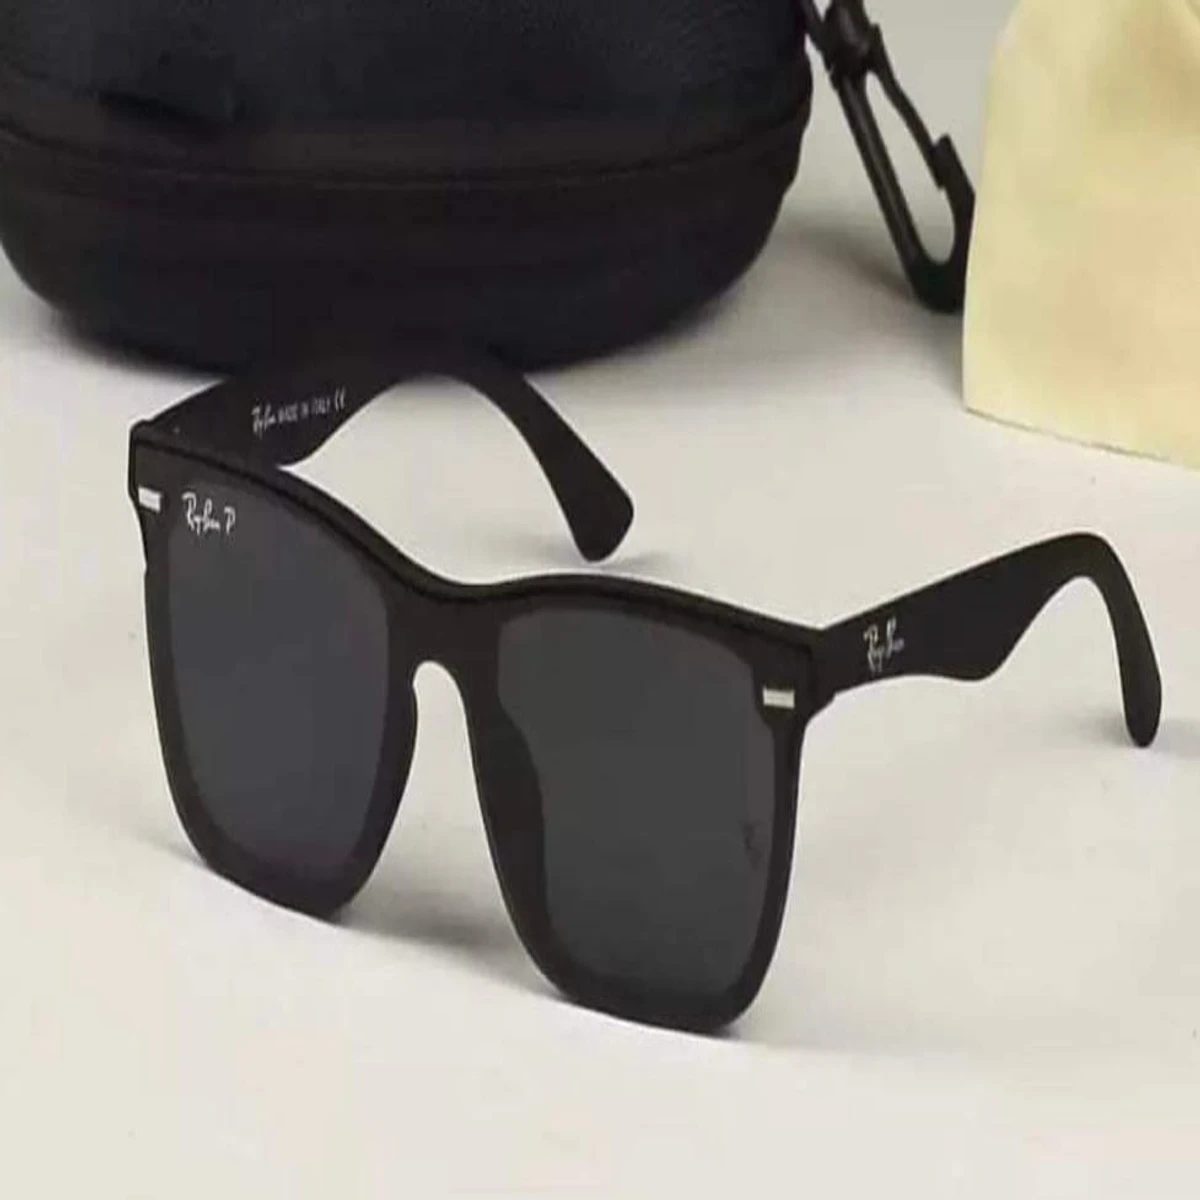 Cheap Good Quality Fashion Sunglasses